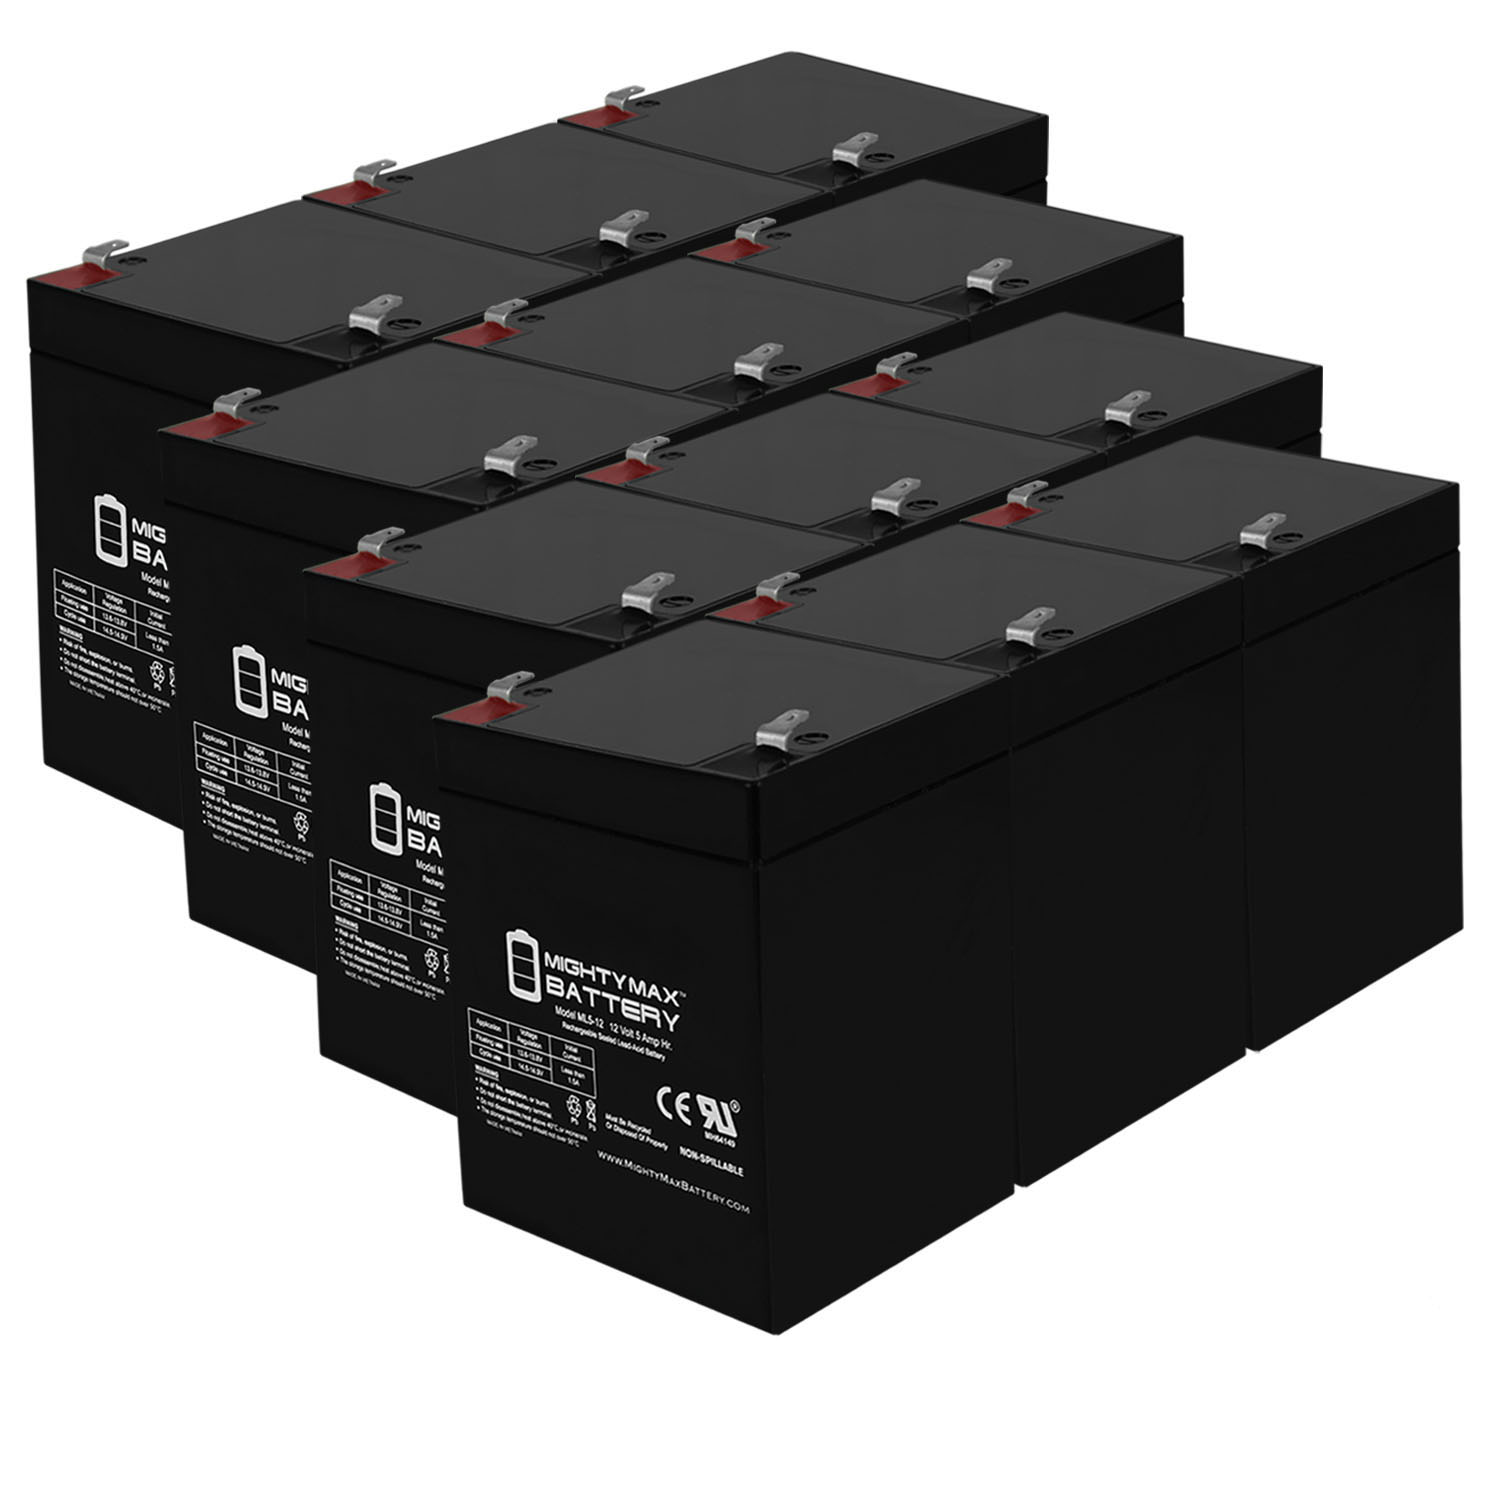 12V 5AH SLA Replacement Battery for Razor E175 Red 13111259 - 12 Pack